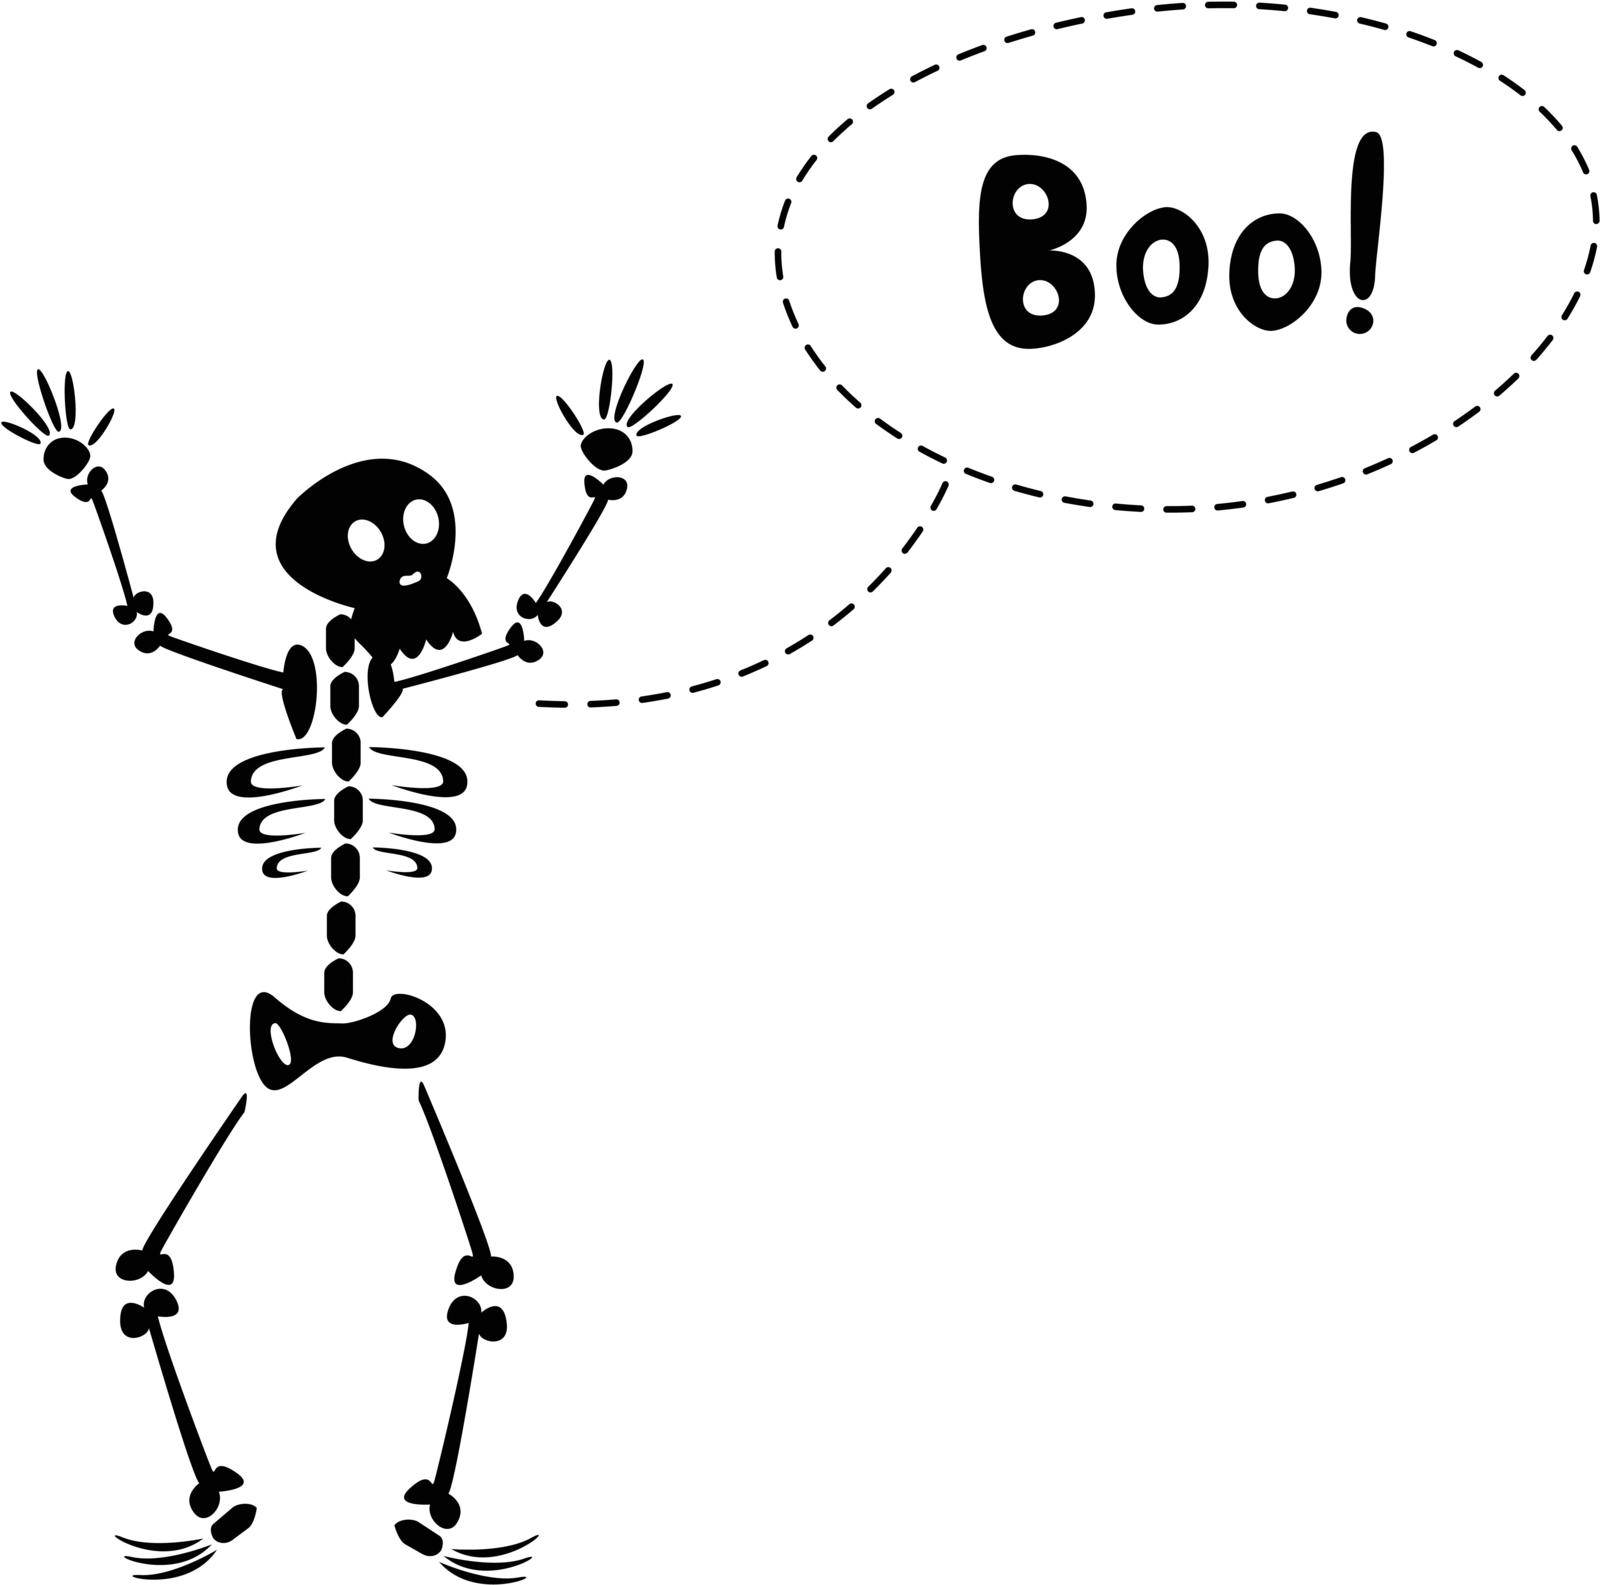 Halloween card with funny cartoon skeleton. Vector illustration